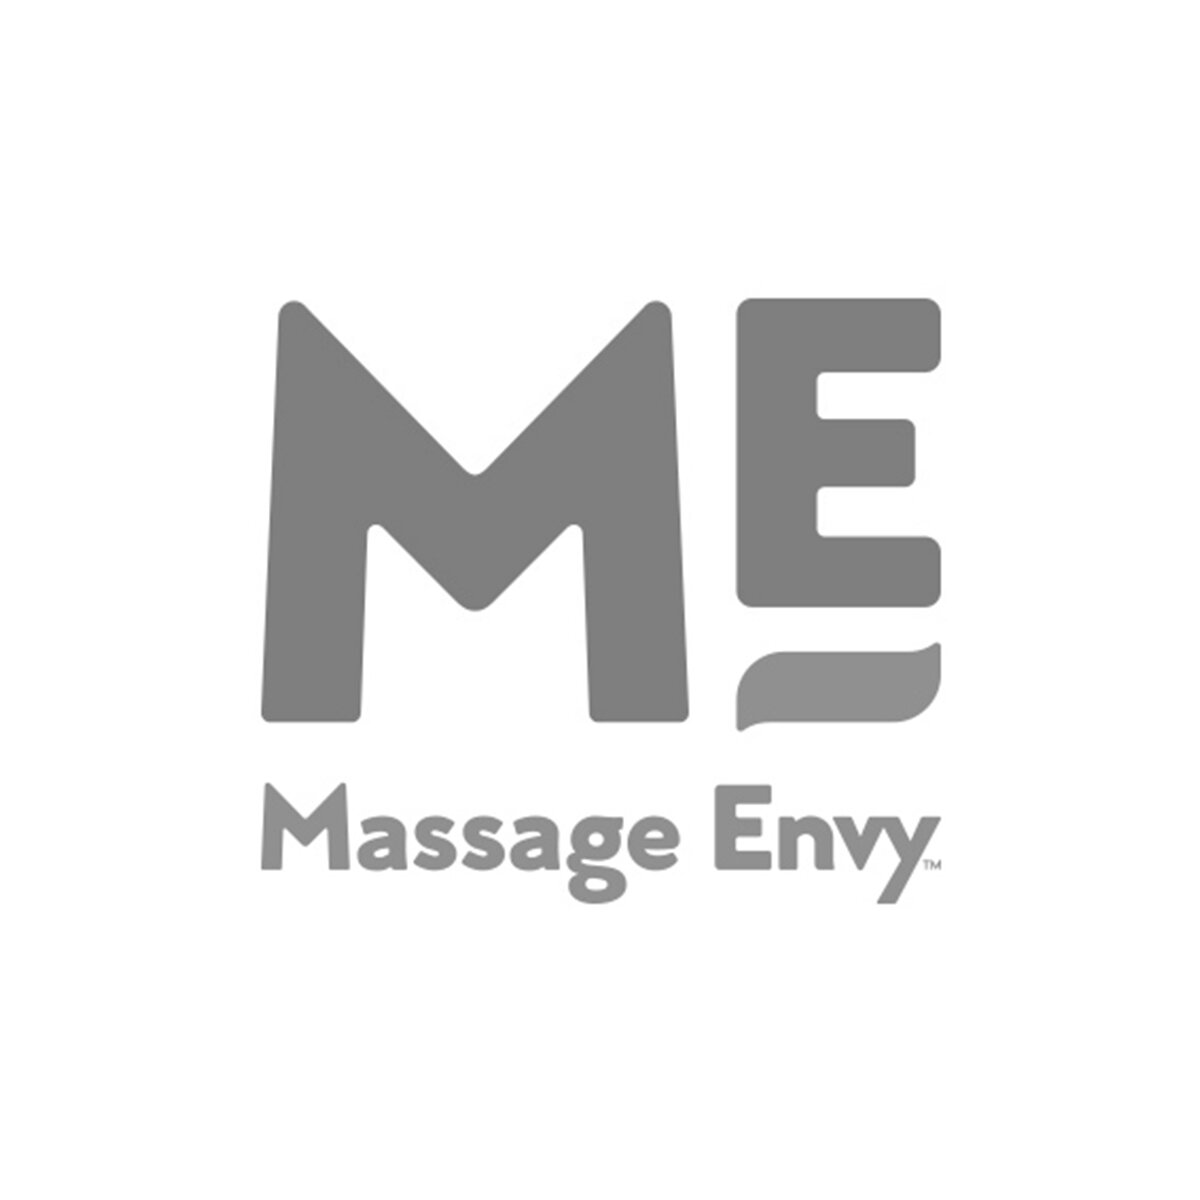 Massage-Envy.jpg